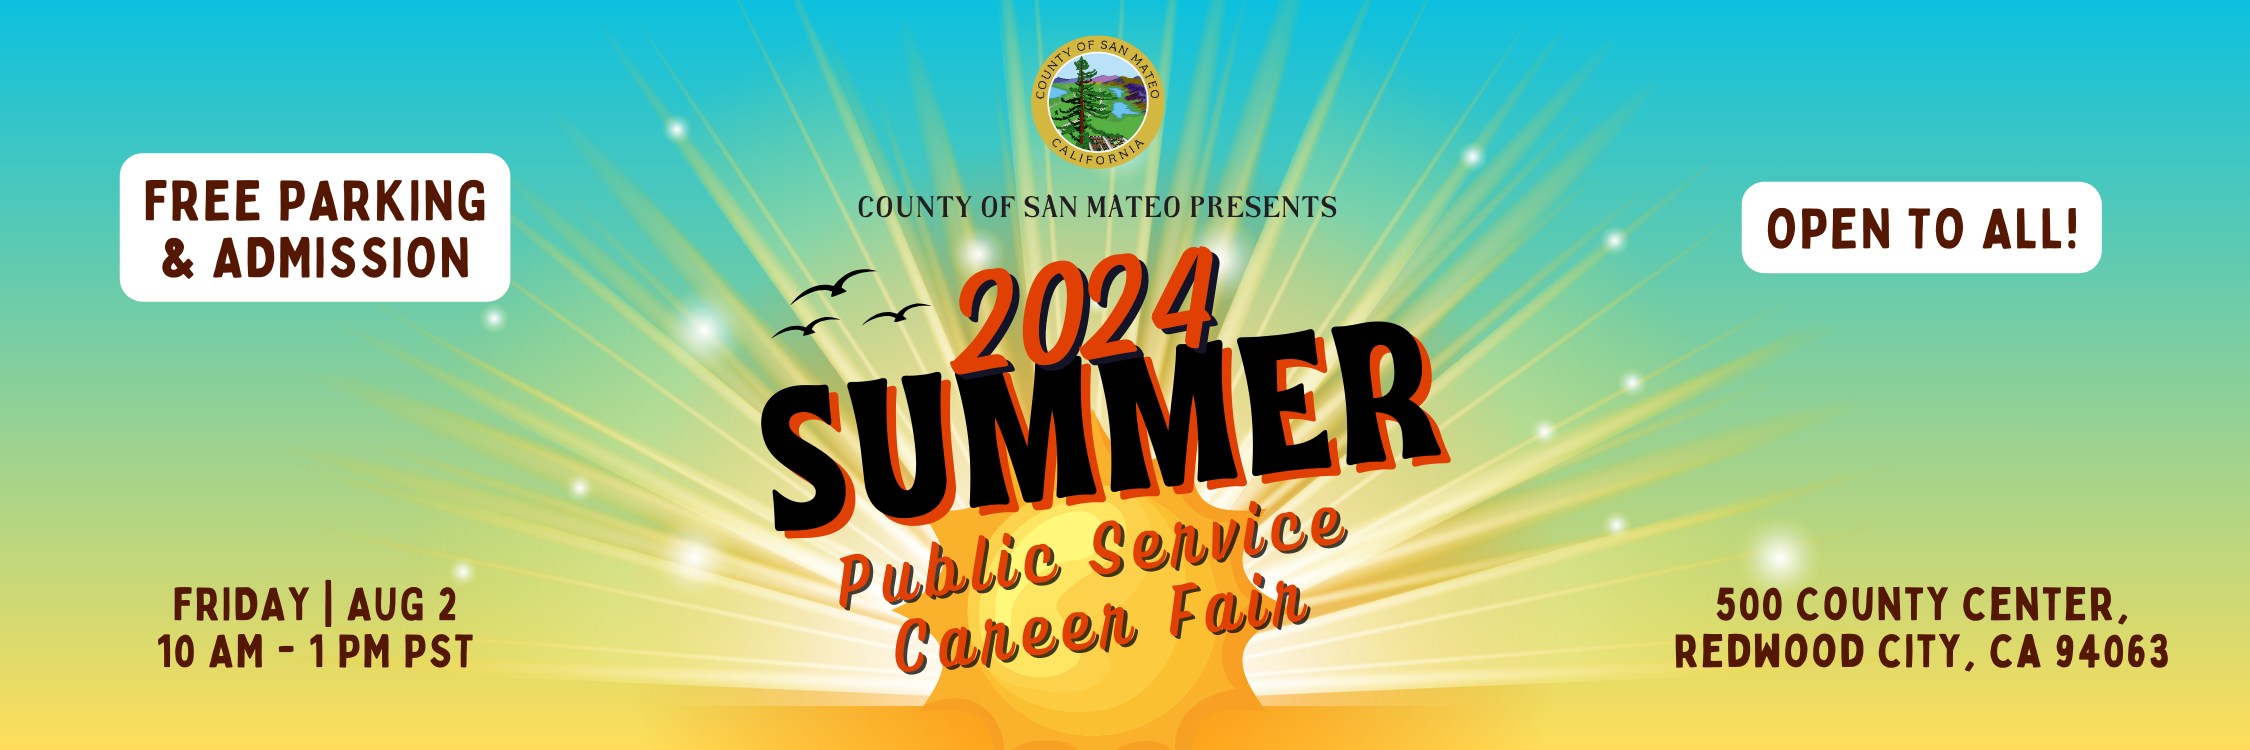 2024 Summer Public Service Career Fair